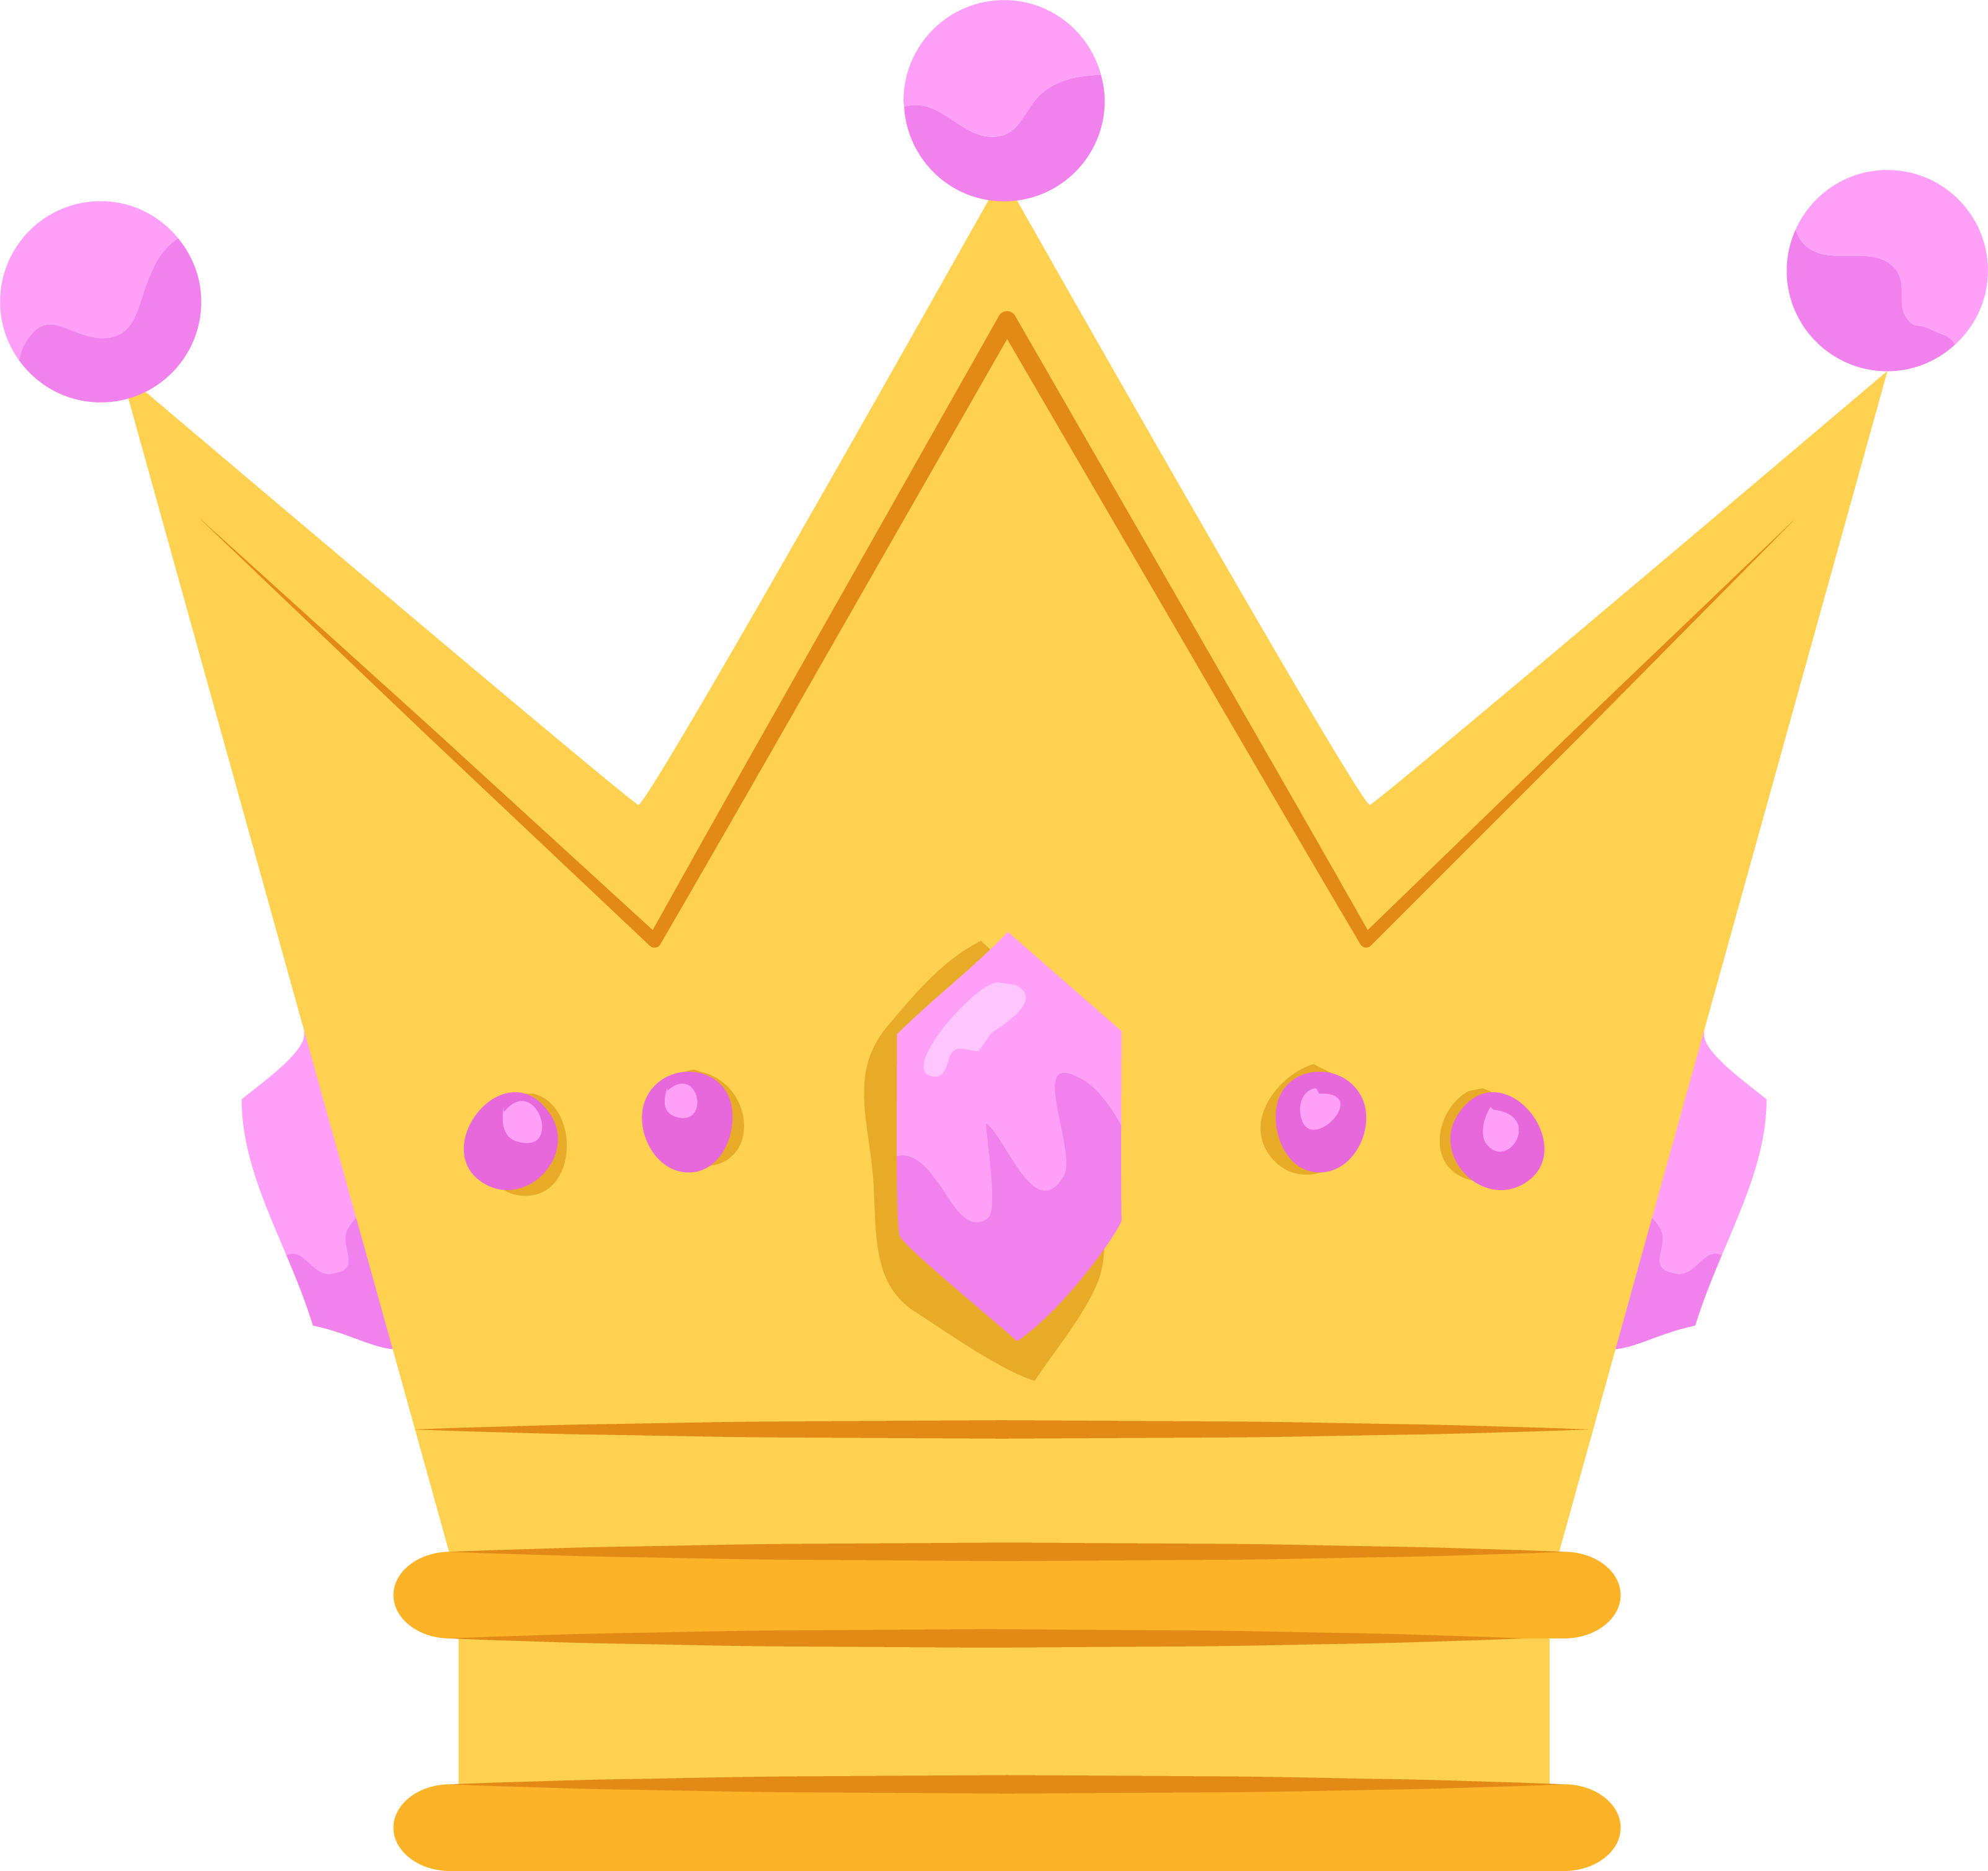 Princess Crown No Background